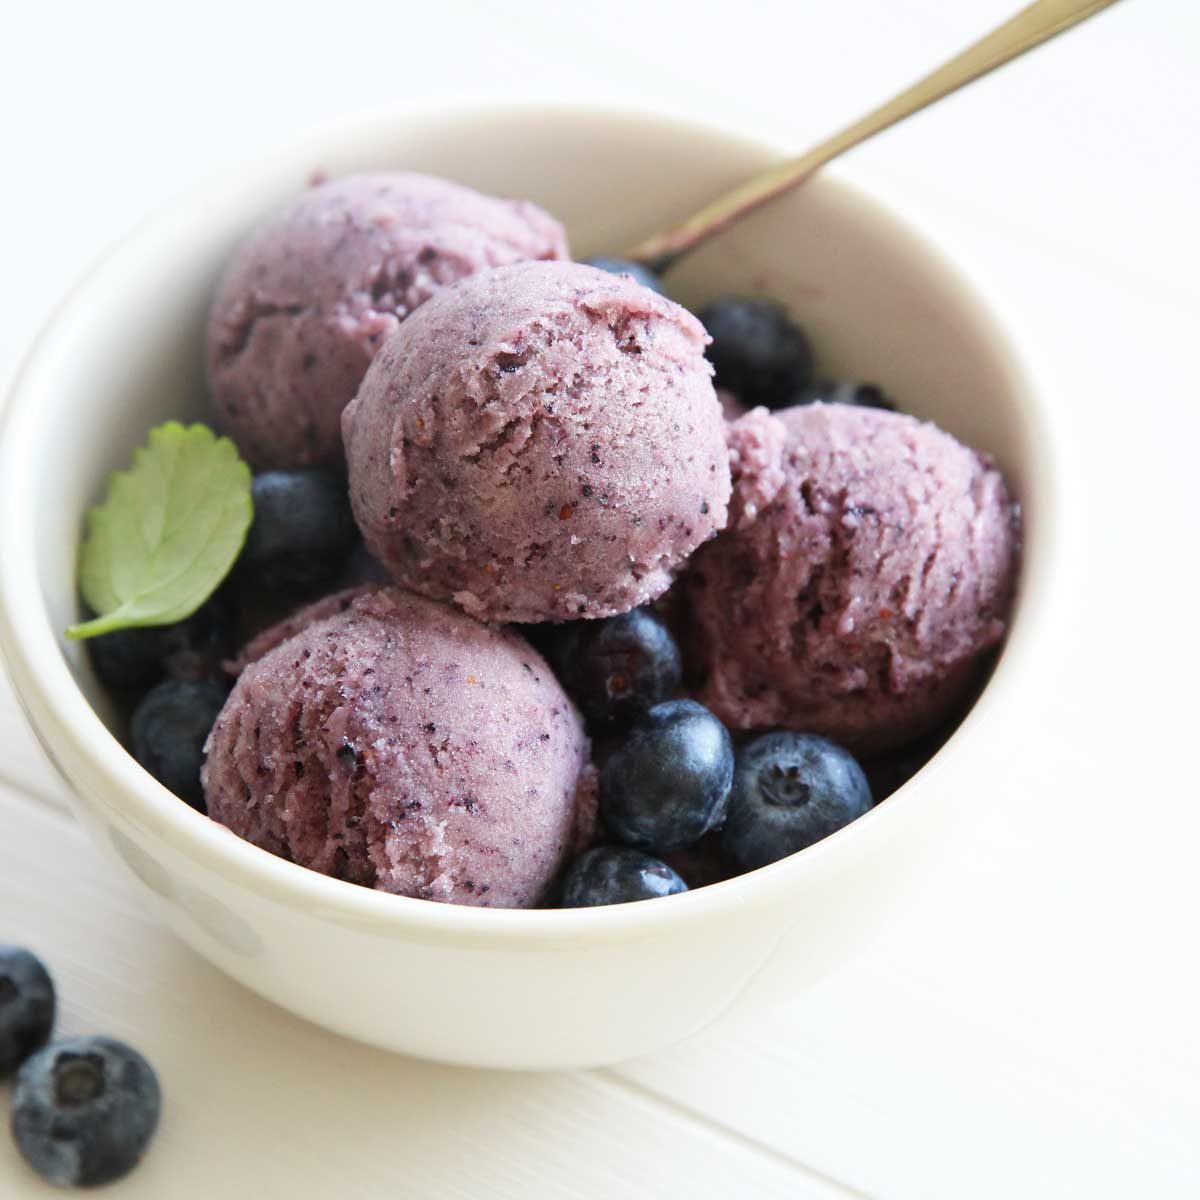 3-Ingredient Blueberry Nice Cream Recipe Made Using Bananas - blueberry nice cream